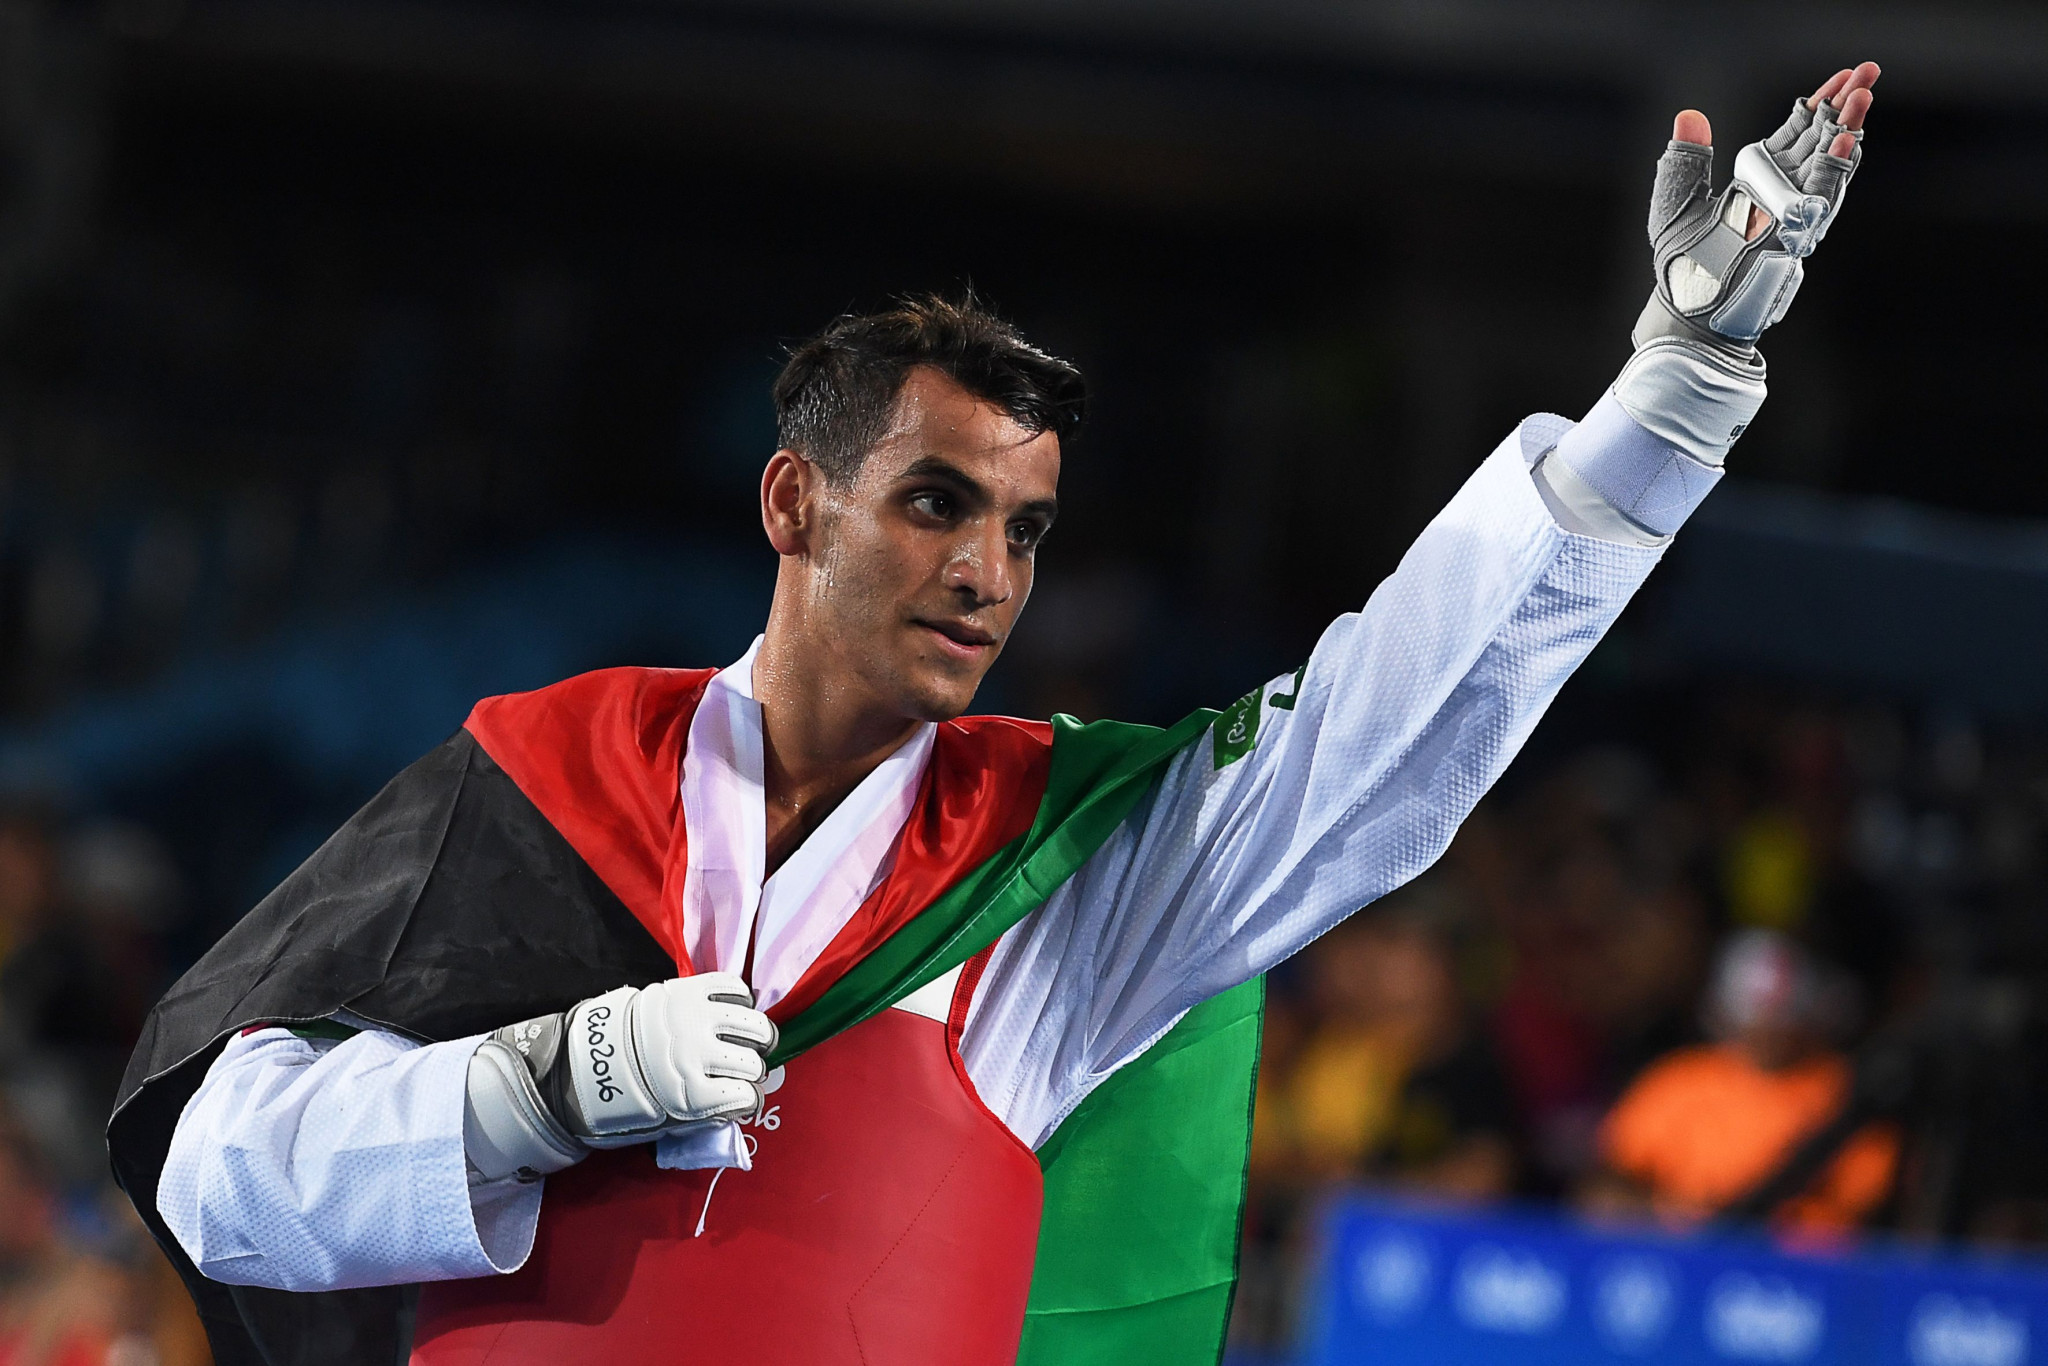 Jordan hails growth of taekwondo under reign of King Abdullah II